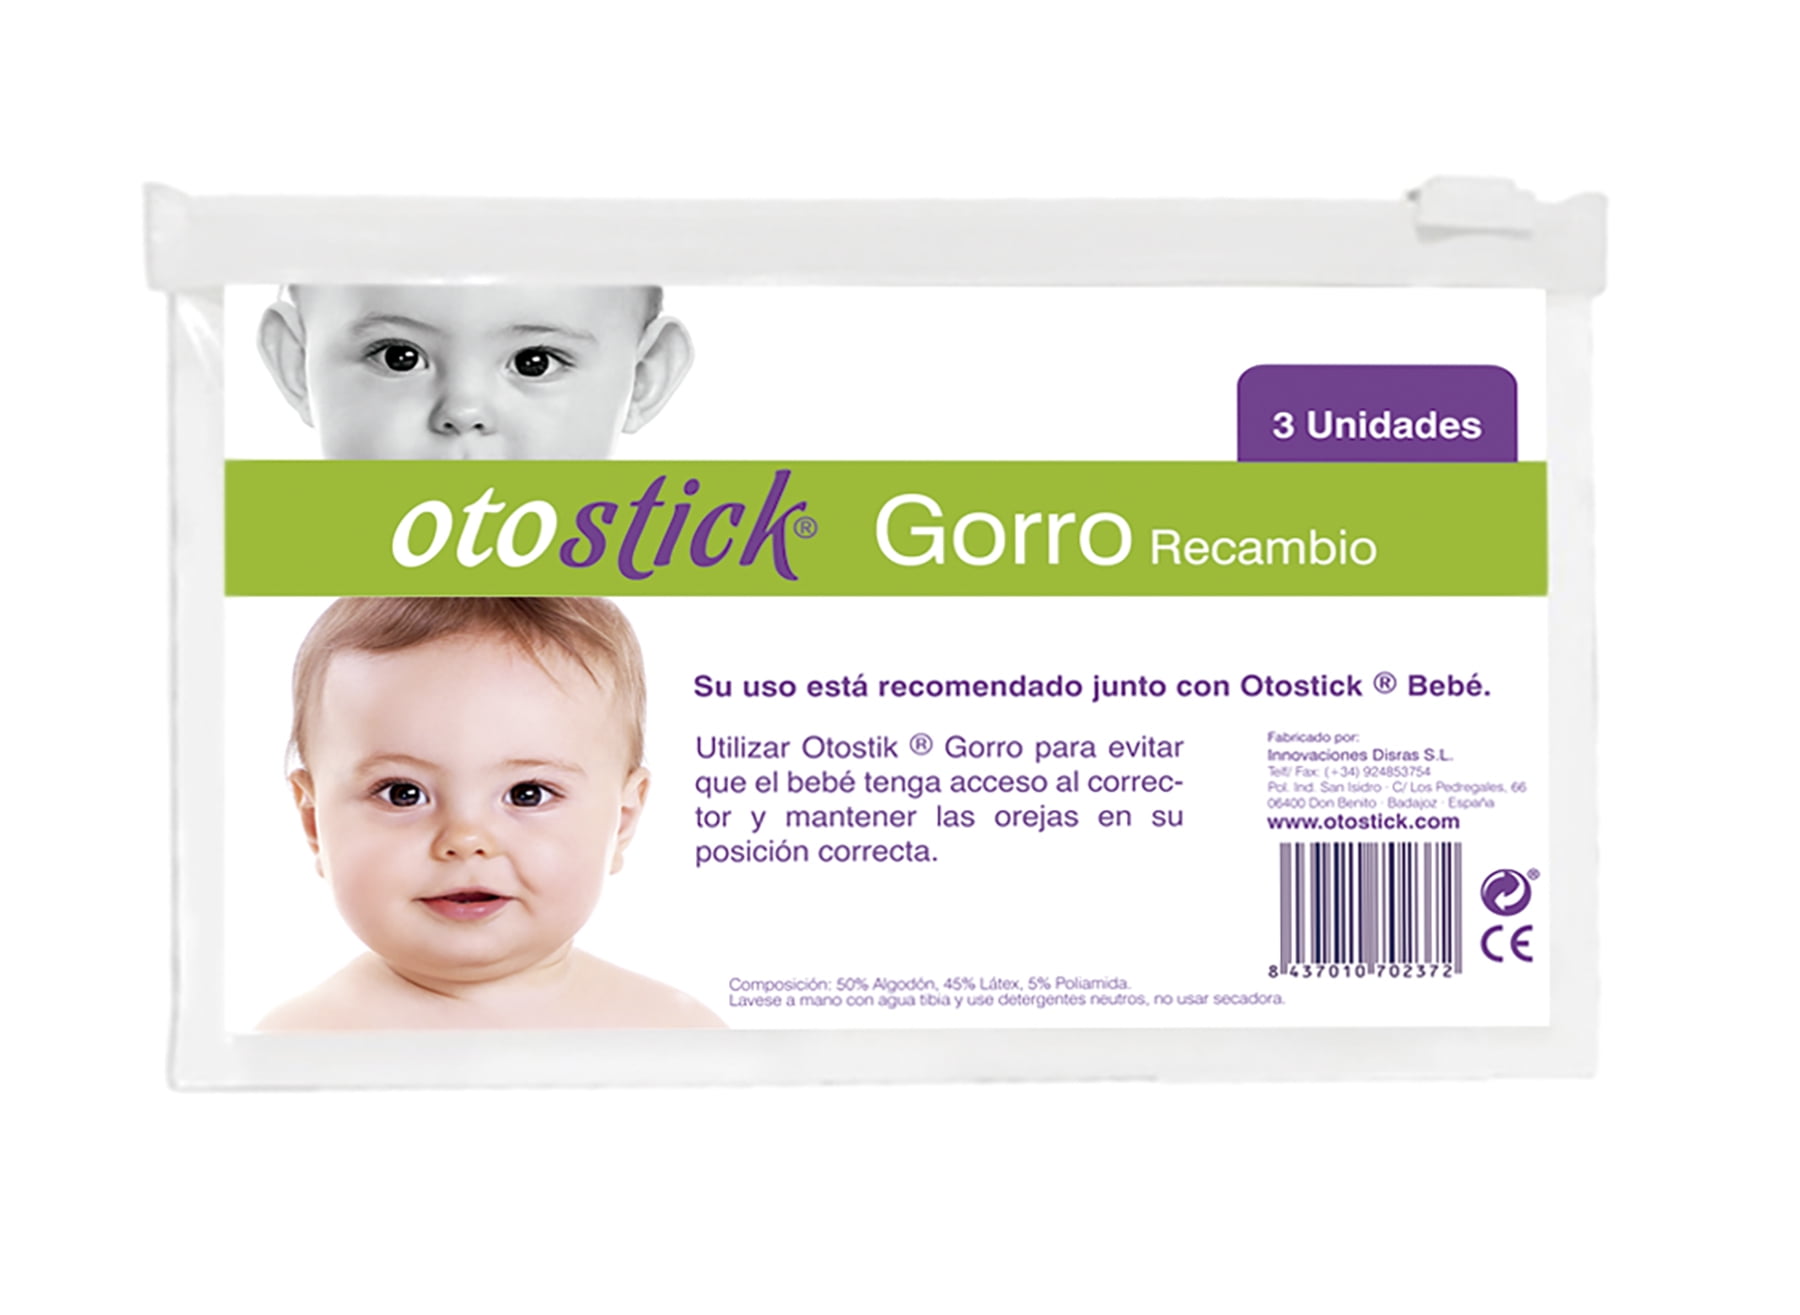 Buy Otostick Baby Ear Corrector 8 units Otostick